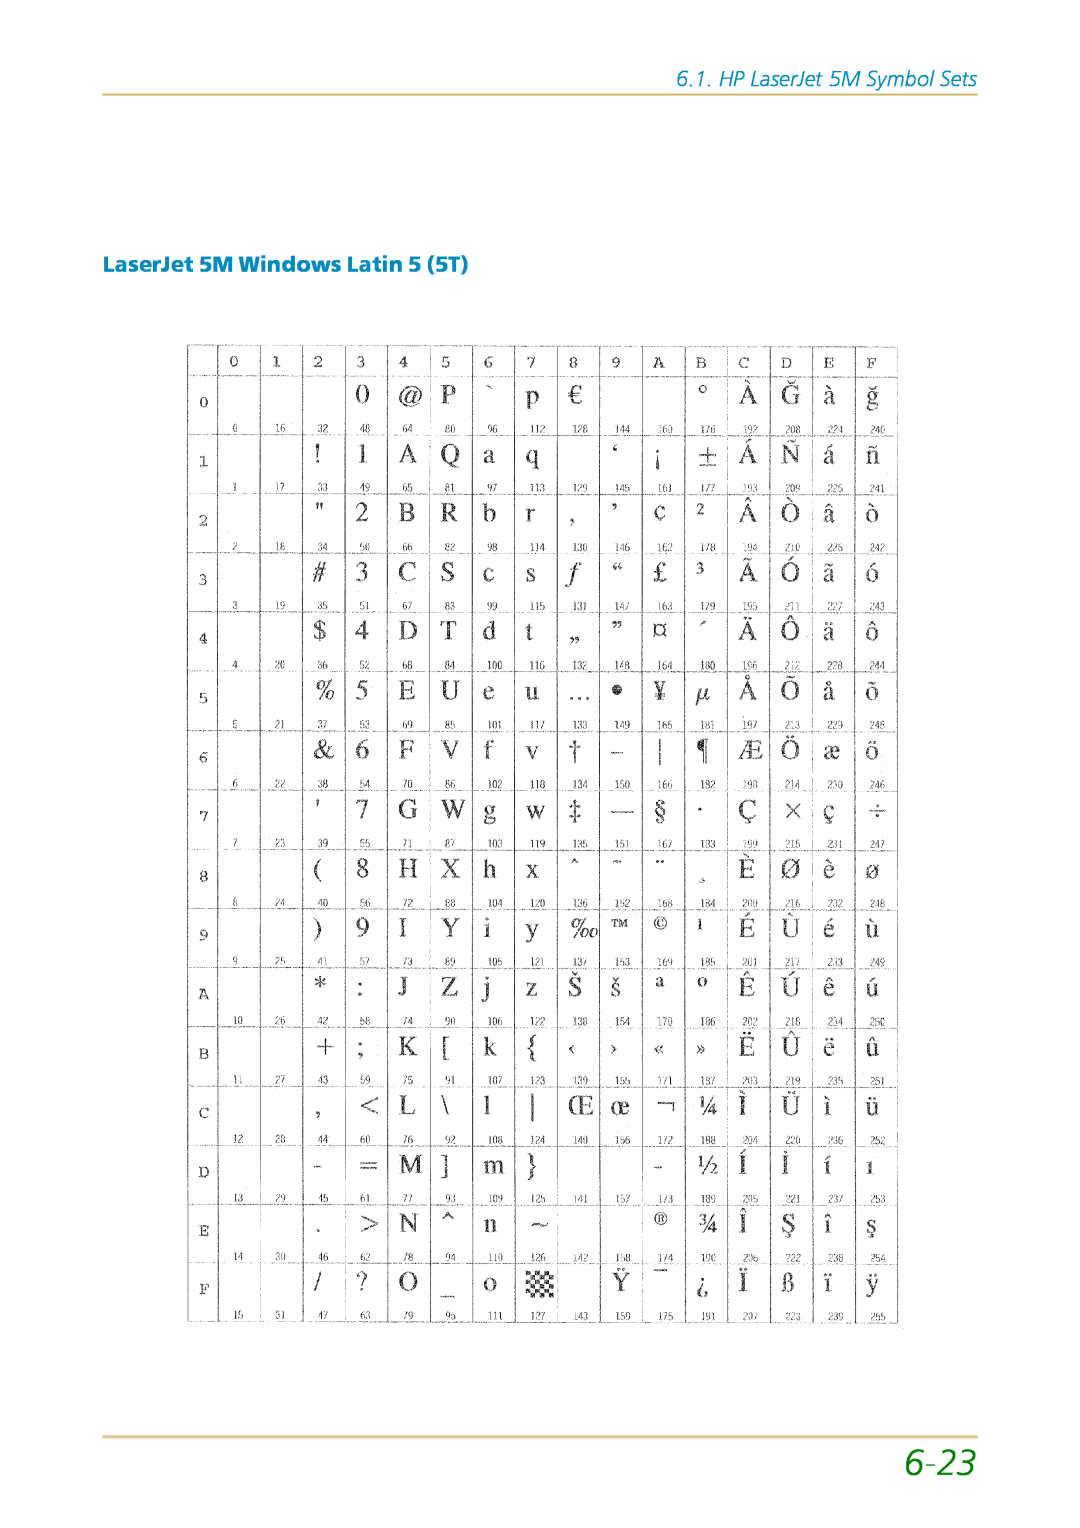 Kyocera FS-1700 user manual 6-23, HP LaserJet 5M Symbol Sets, LaserJet 5M Windows Latin 5 5T 